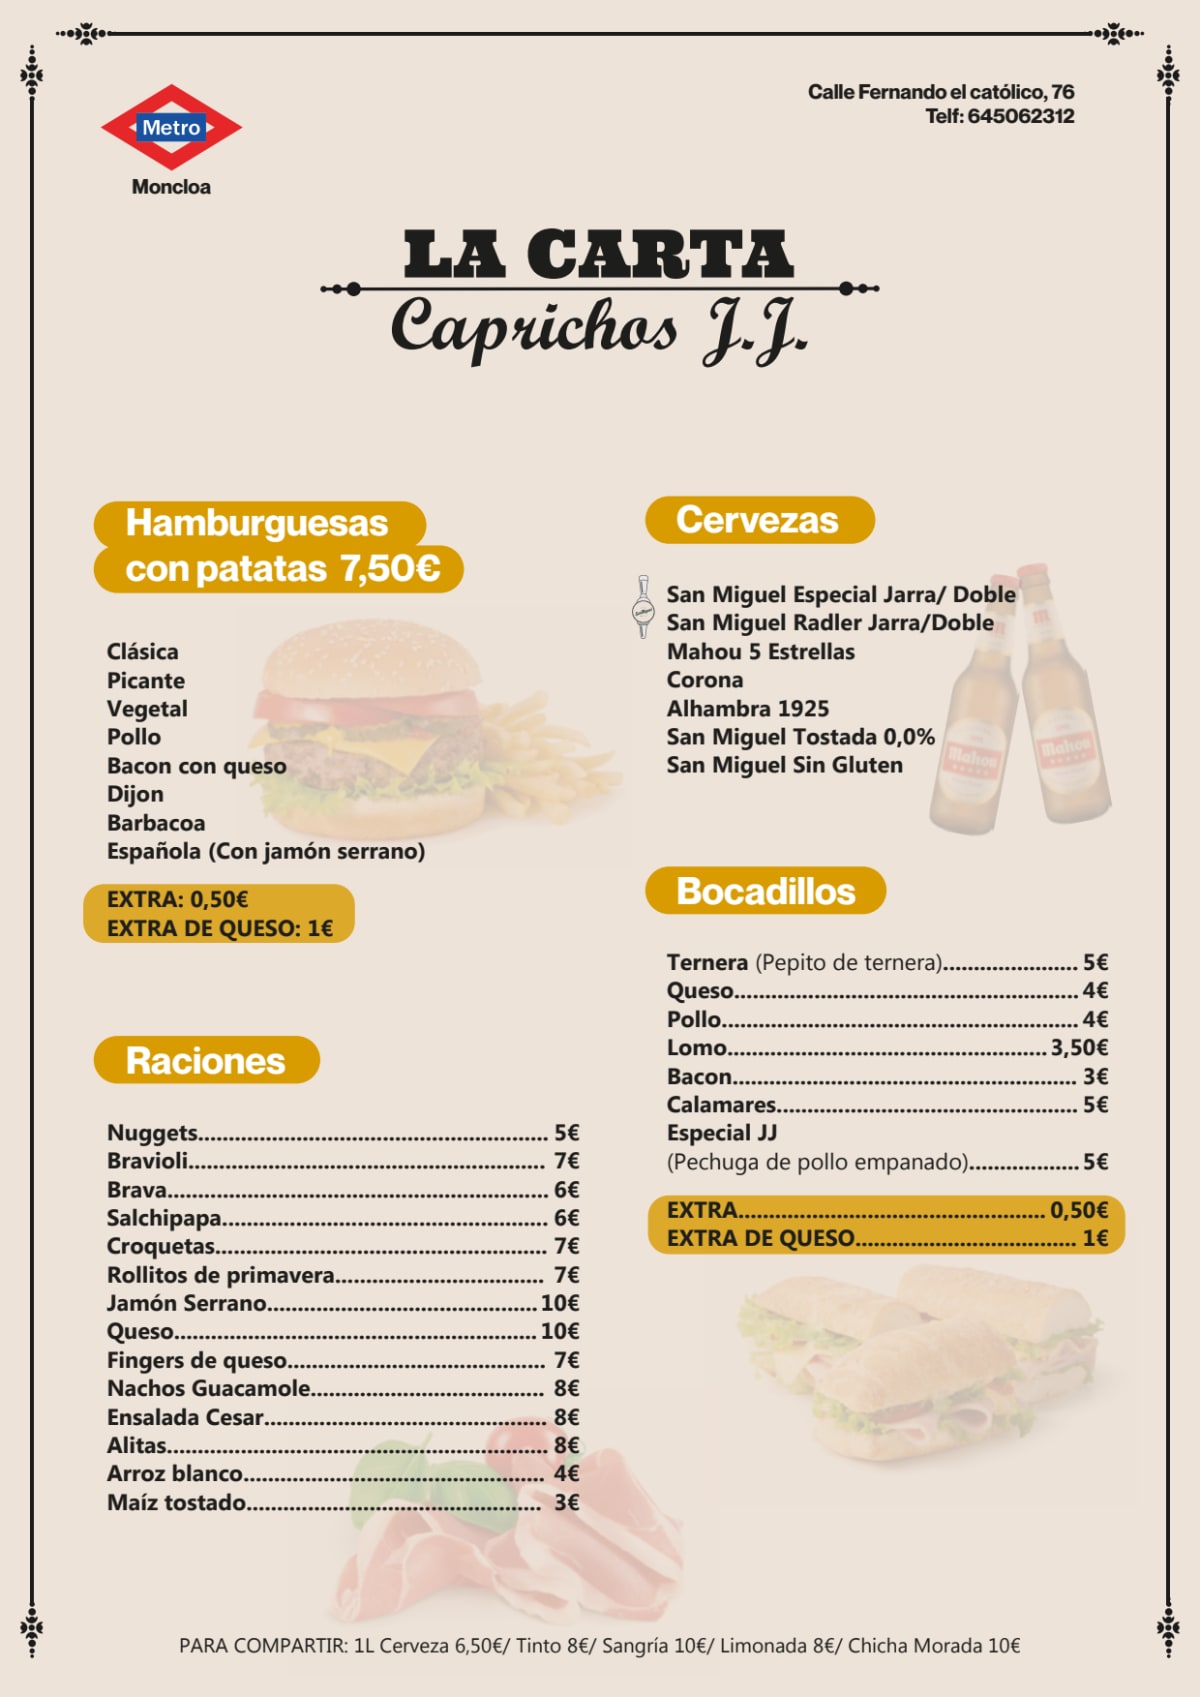 Caprichos JJ menu